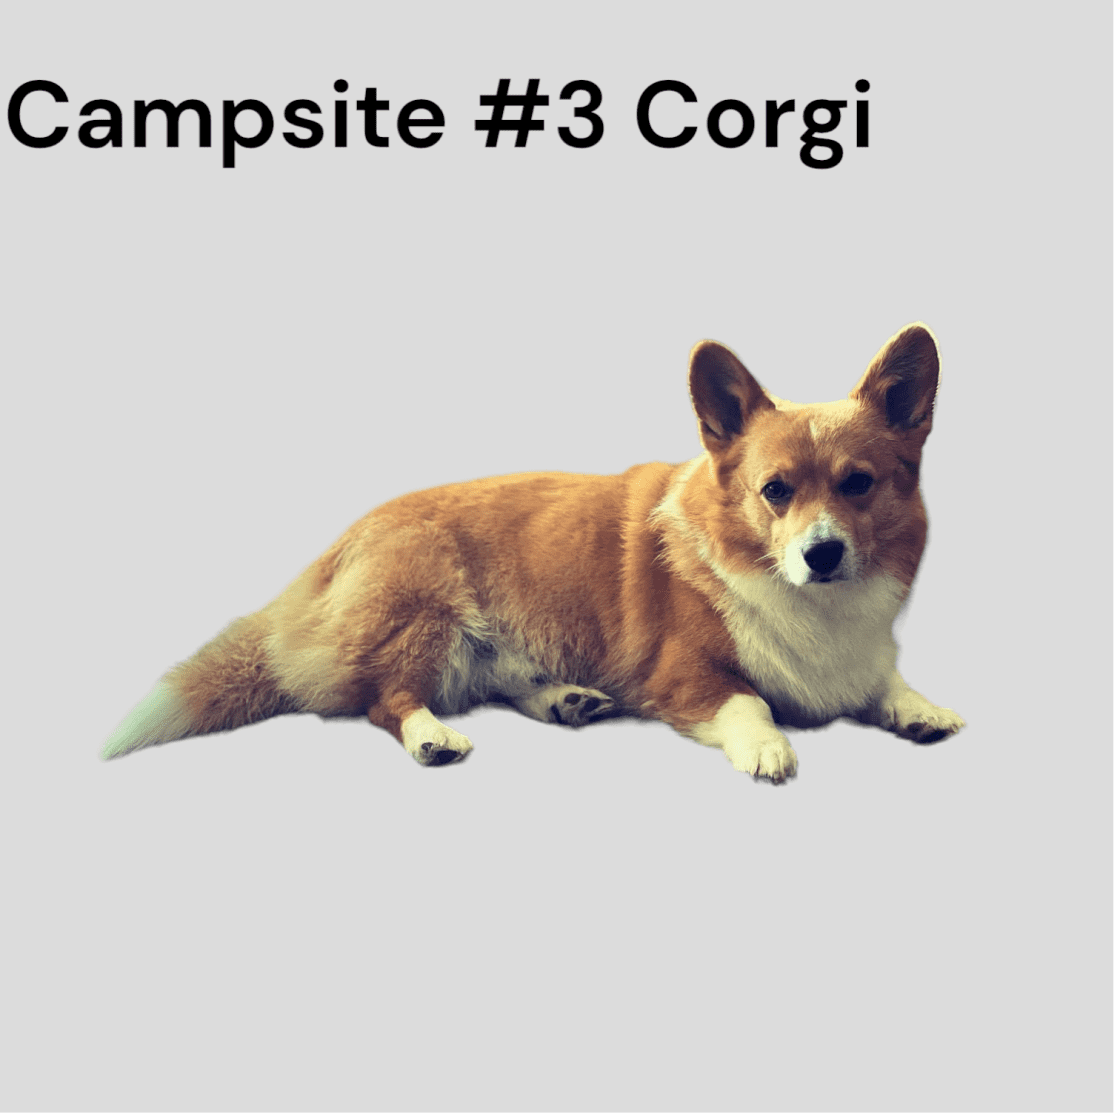 Campsite #3 Corgi